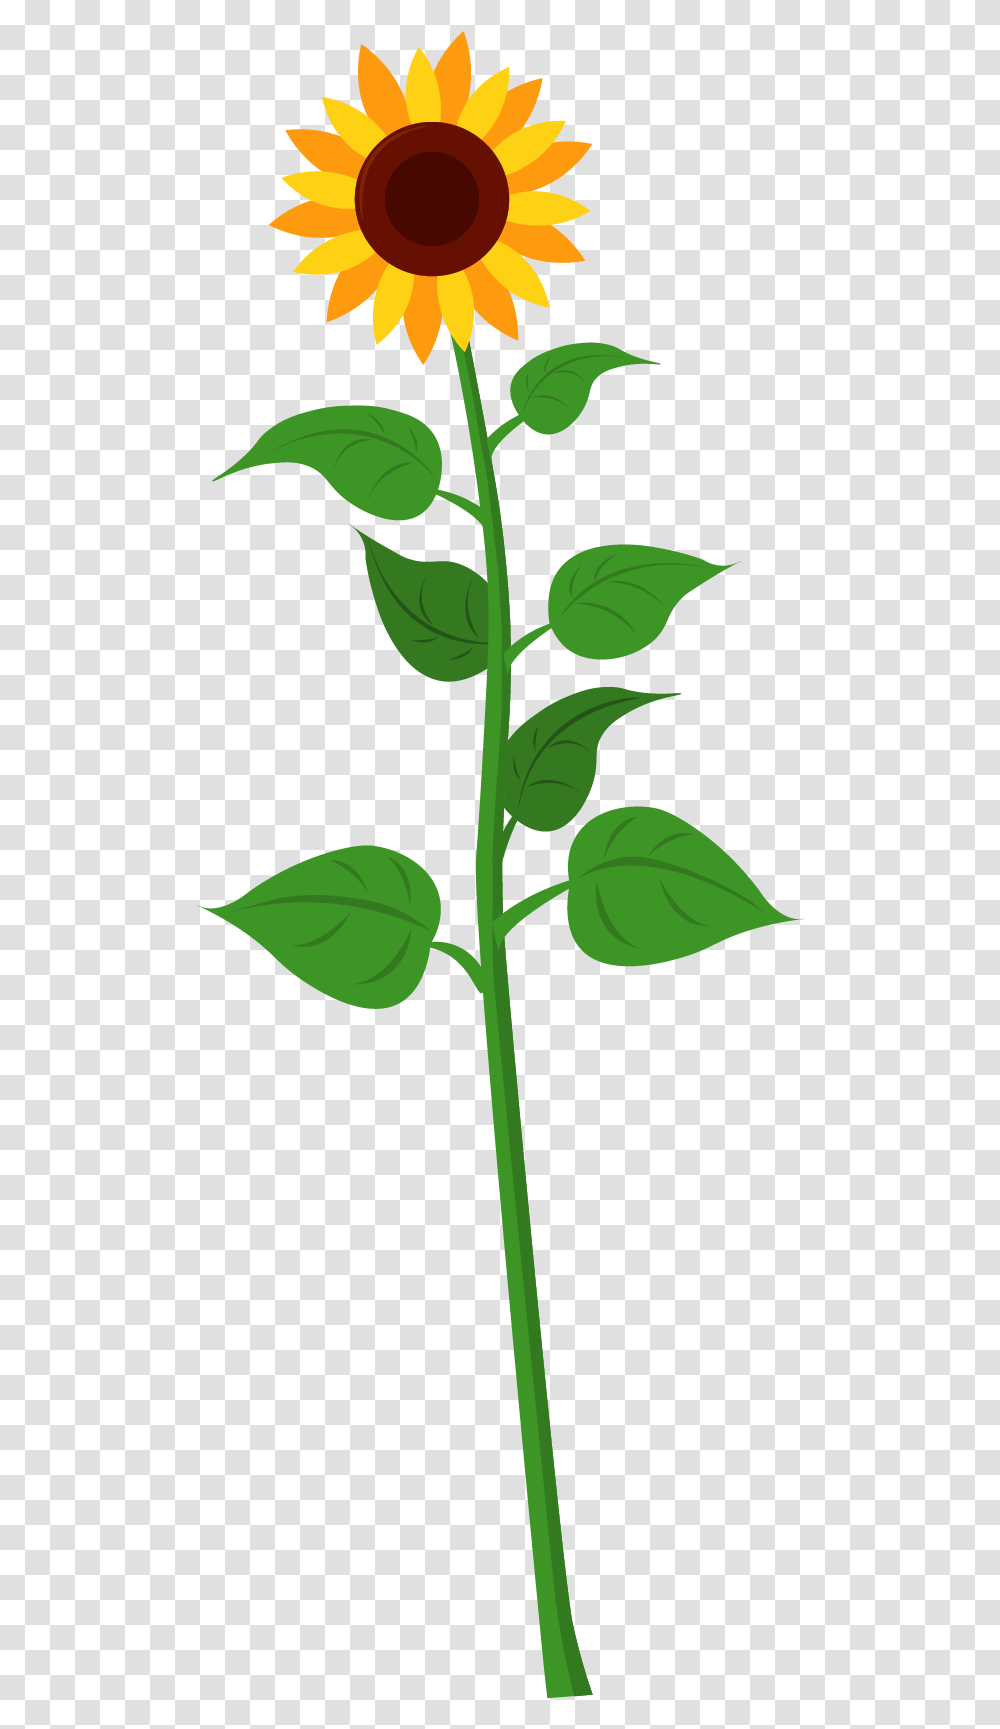 Drawn Sunflower Tall Sunflower Clip Art Of Tall Sunflower, Leaf, Plant, Green, Tree Transparent Png